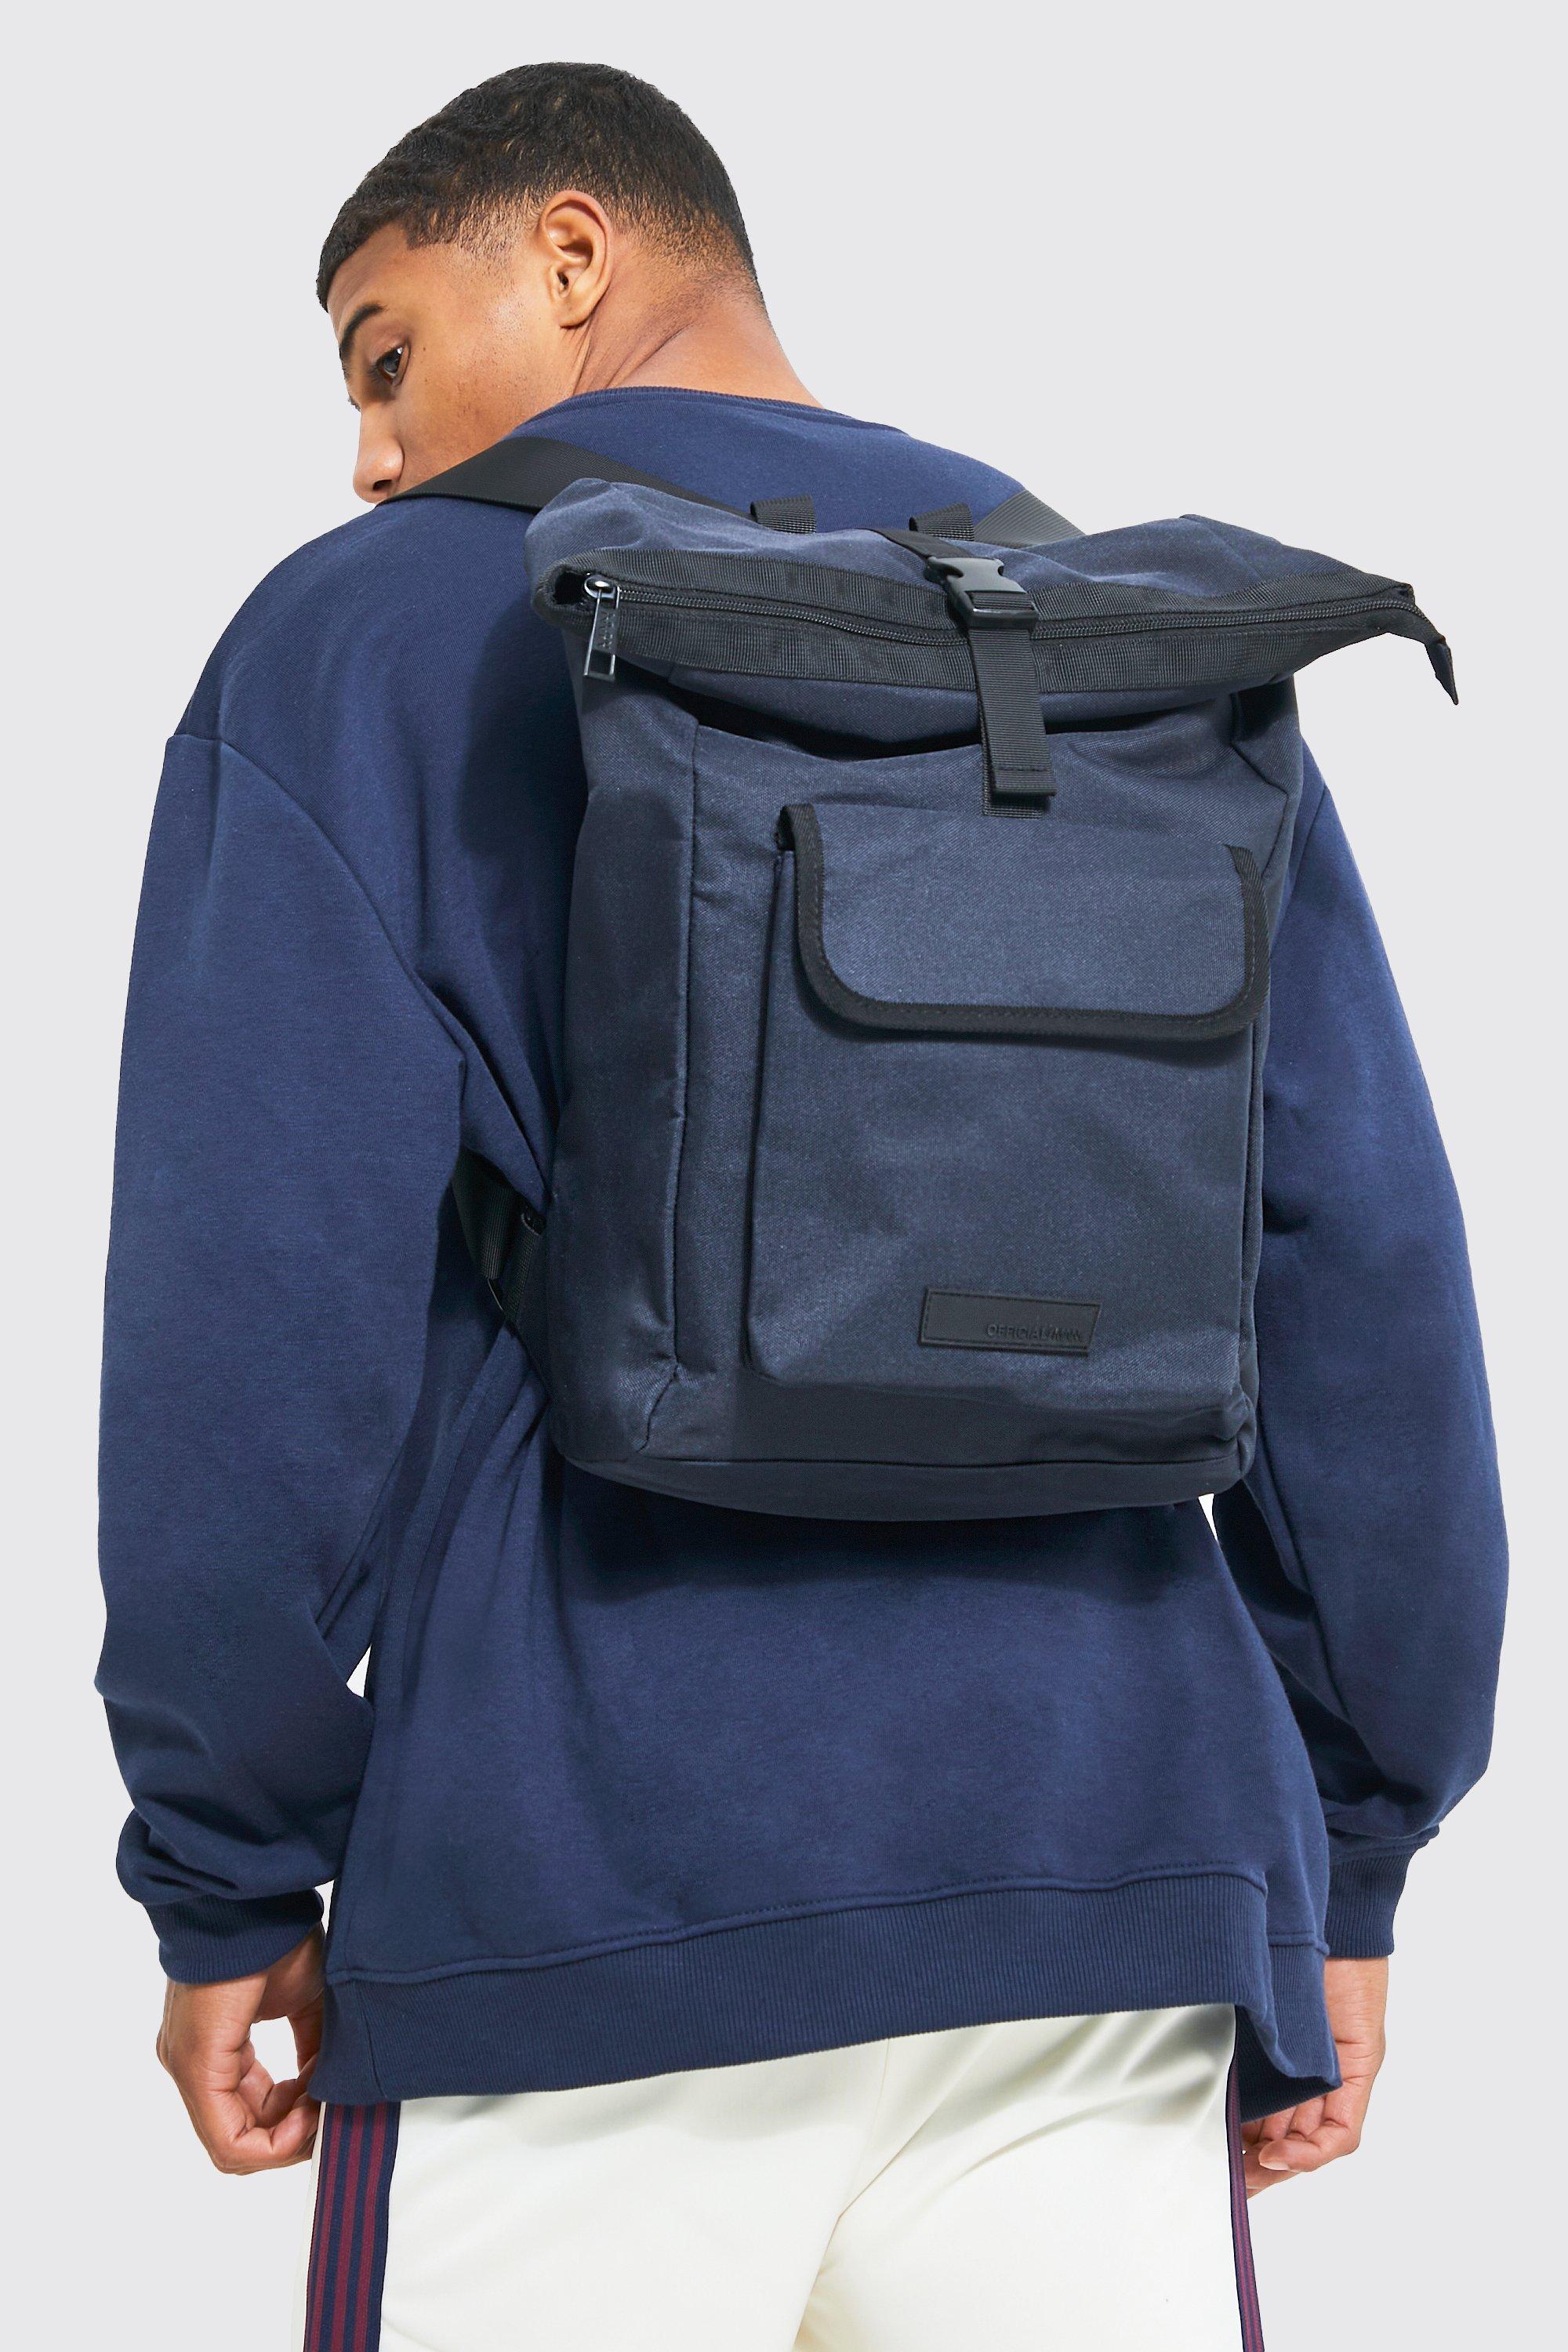 sac à dos en nylon homme - bleu - one size, bleu